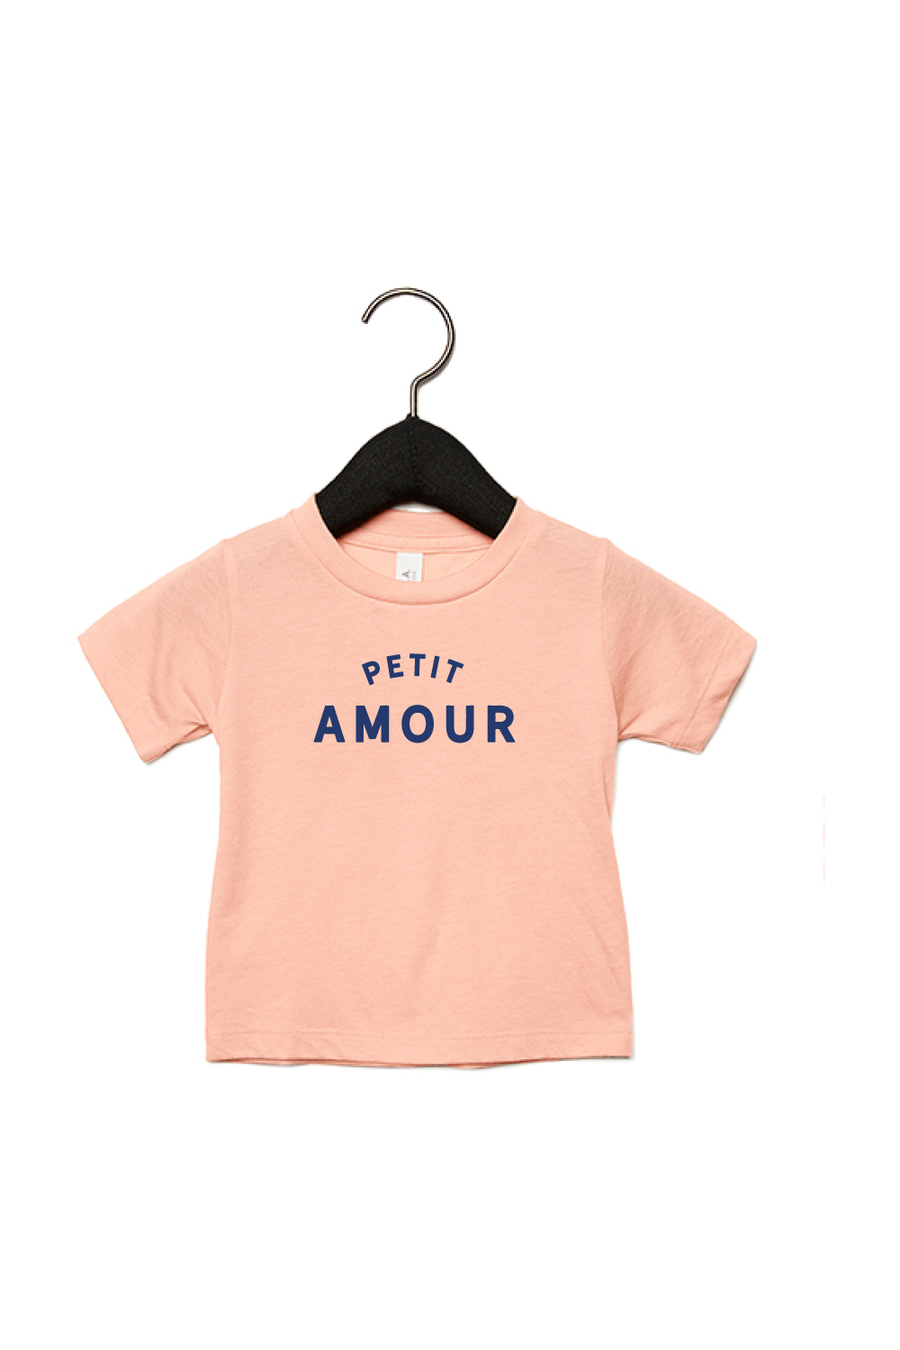 Petit amour baby t-shirt * diverse kleuren - Joh Clothing